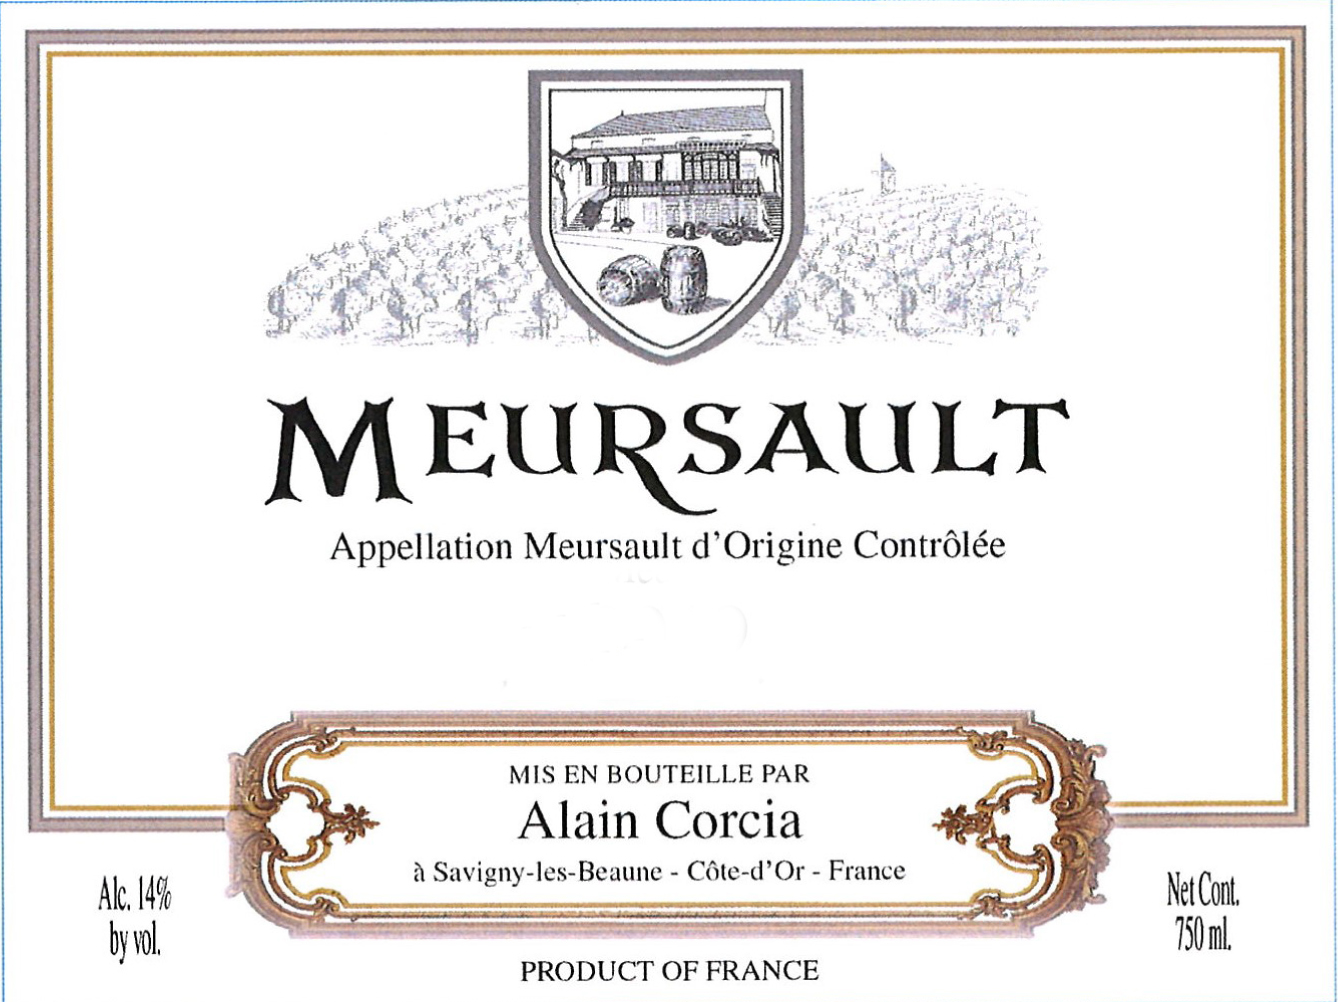 Collection Alain Corcia - Meursault label